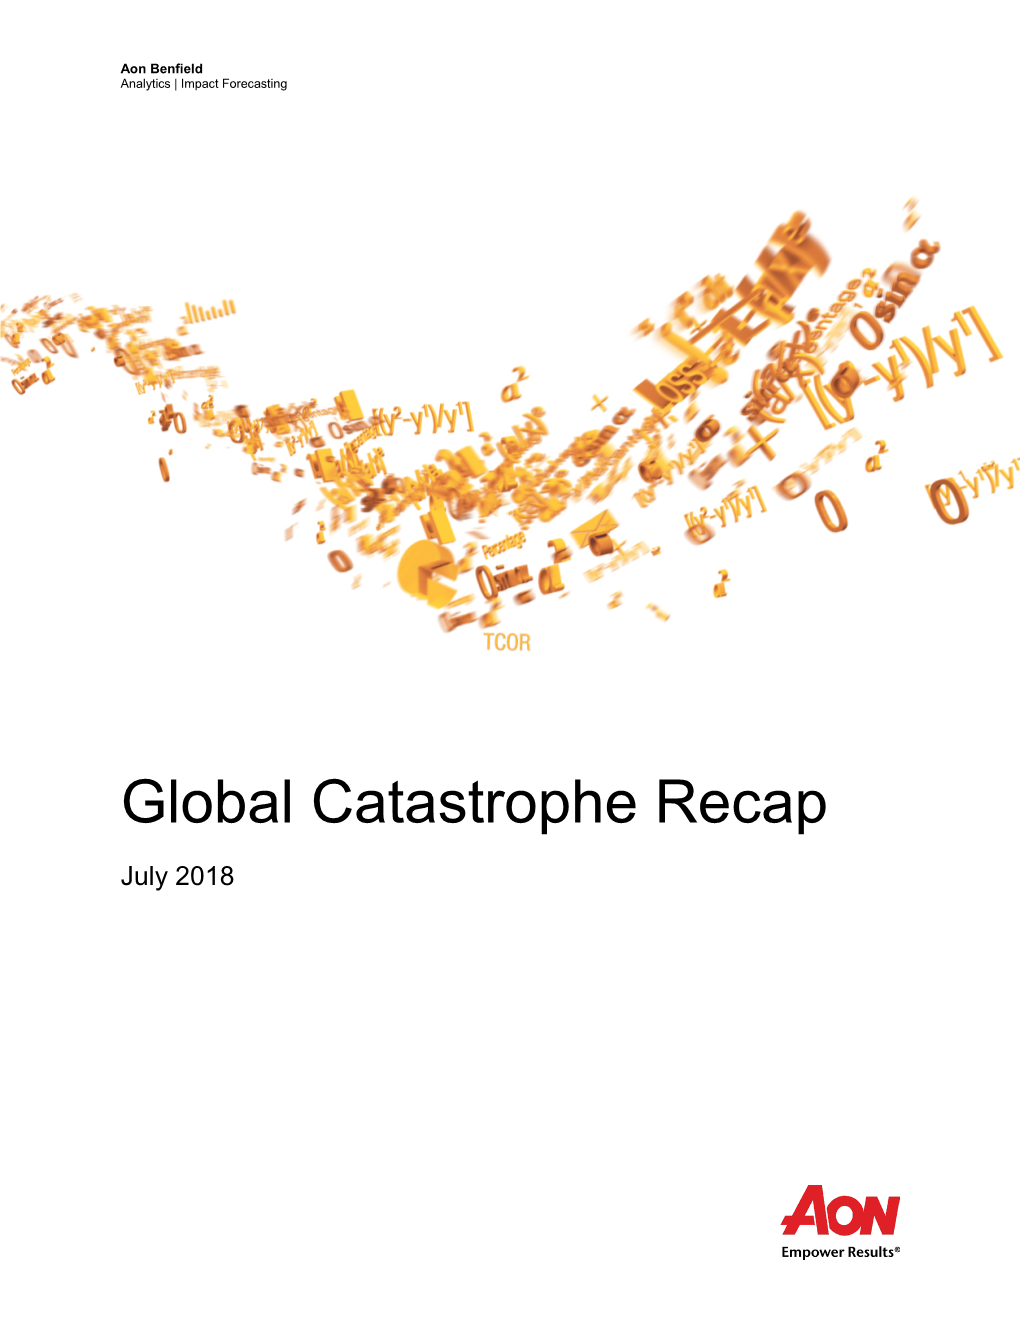 Global Catastrophe Recap July 2018